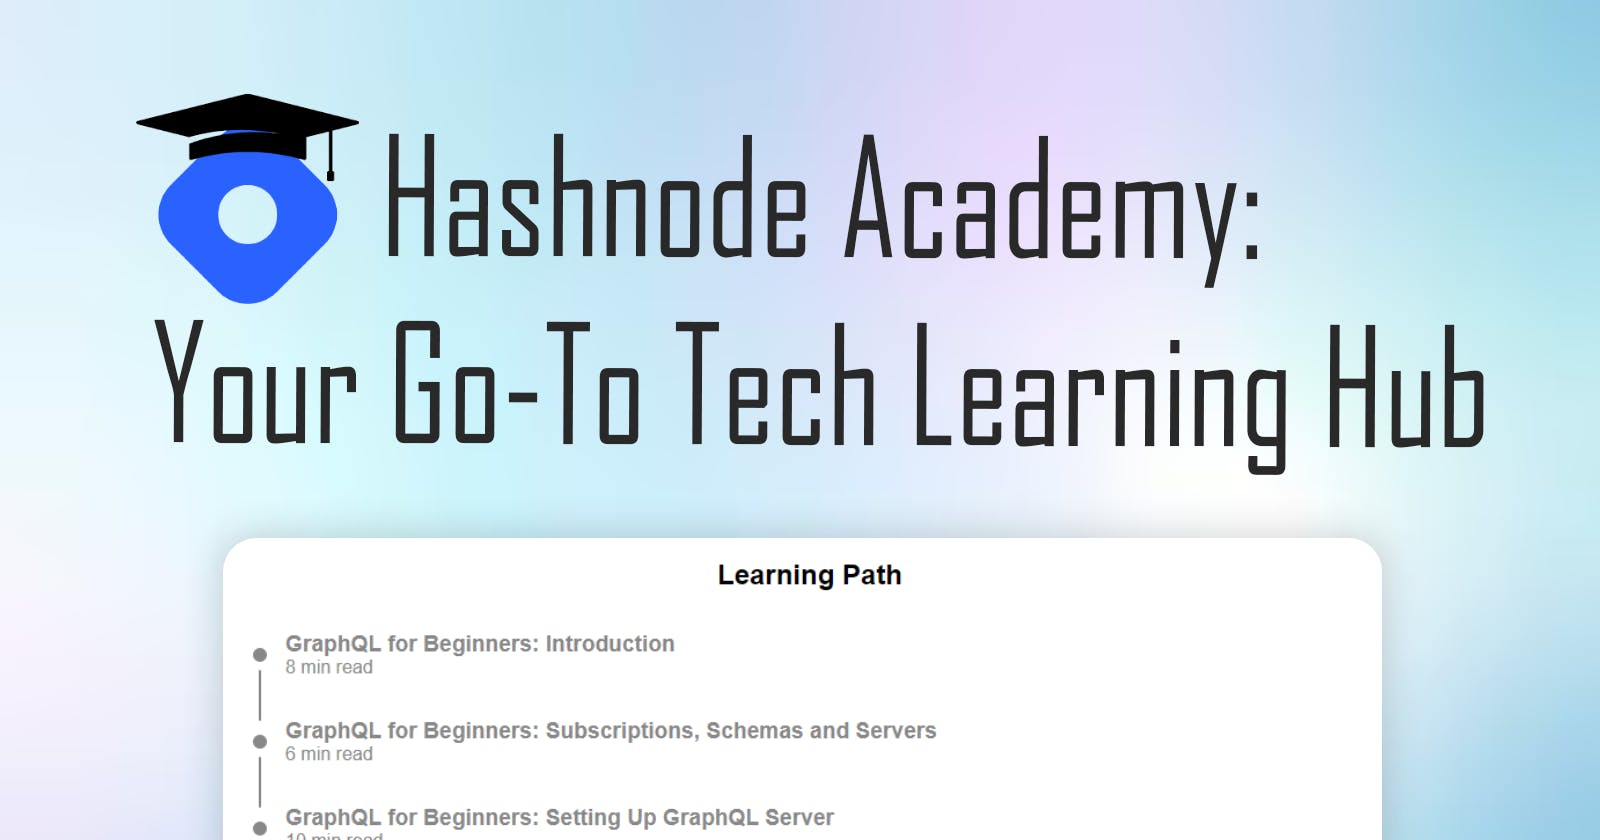 Hashnode Academy: Your Go-To Tech Learning Hub